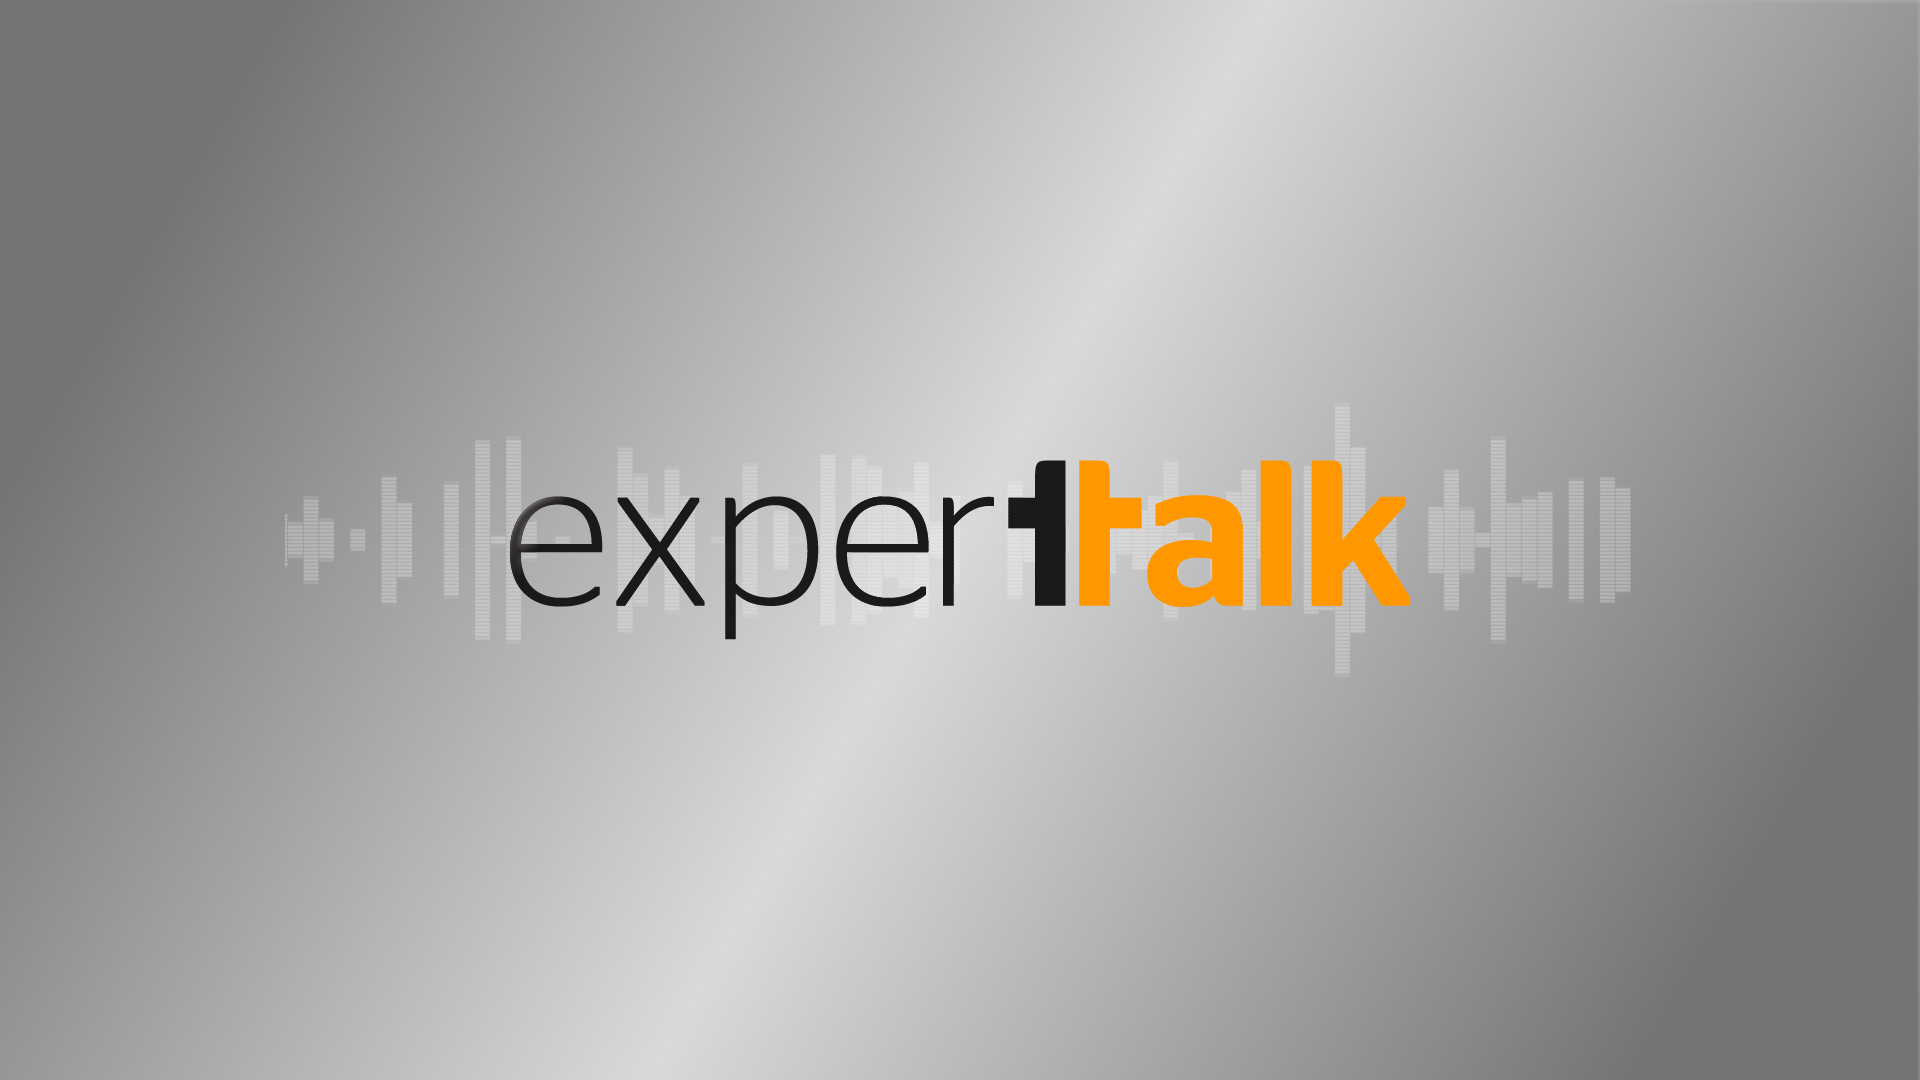 Expert Talk